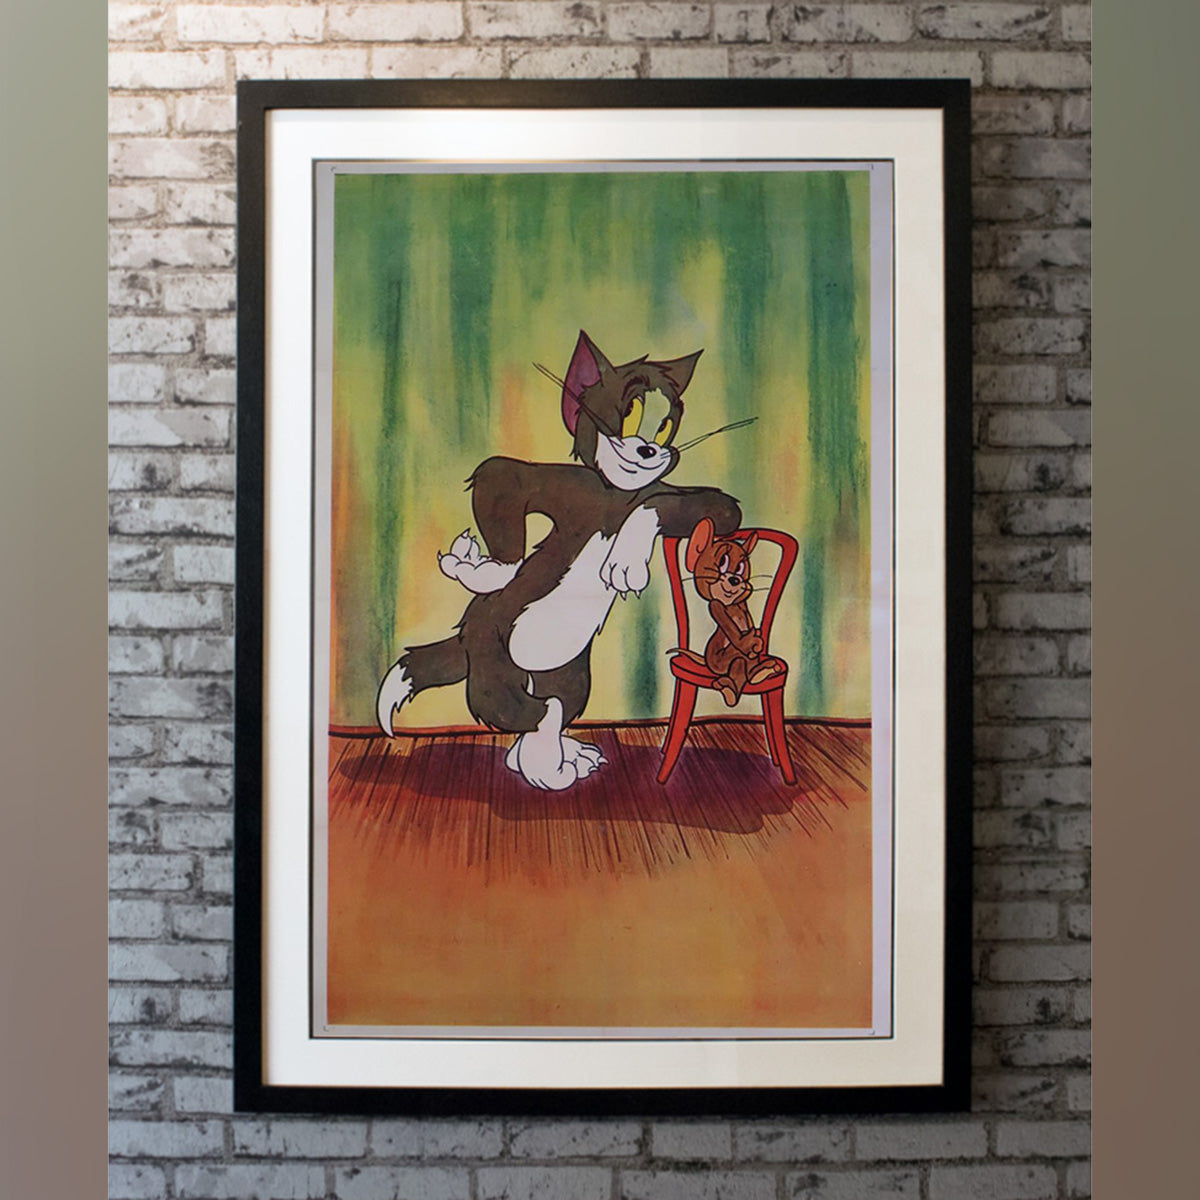 Original Movie Poster of Tom And Jerry (1950R)